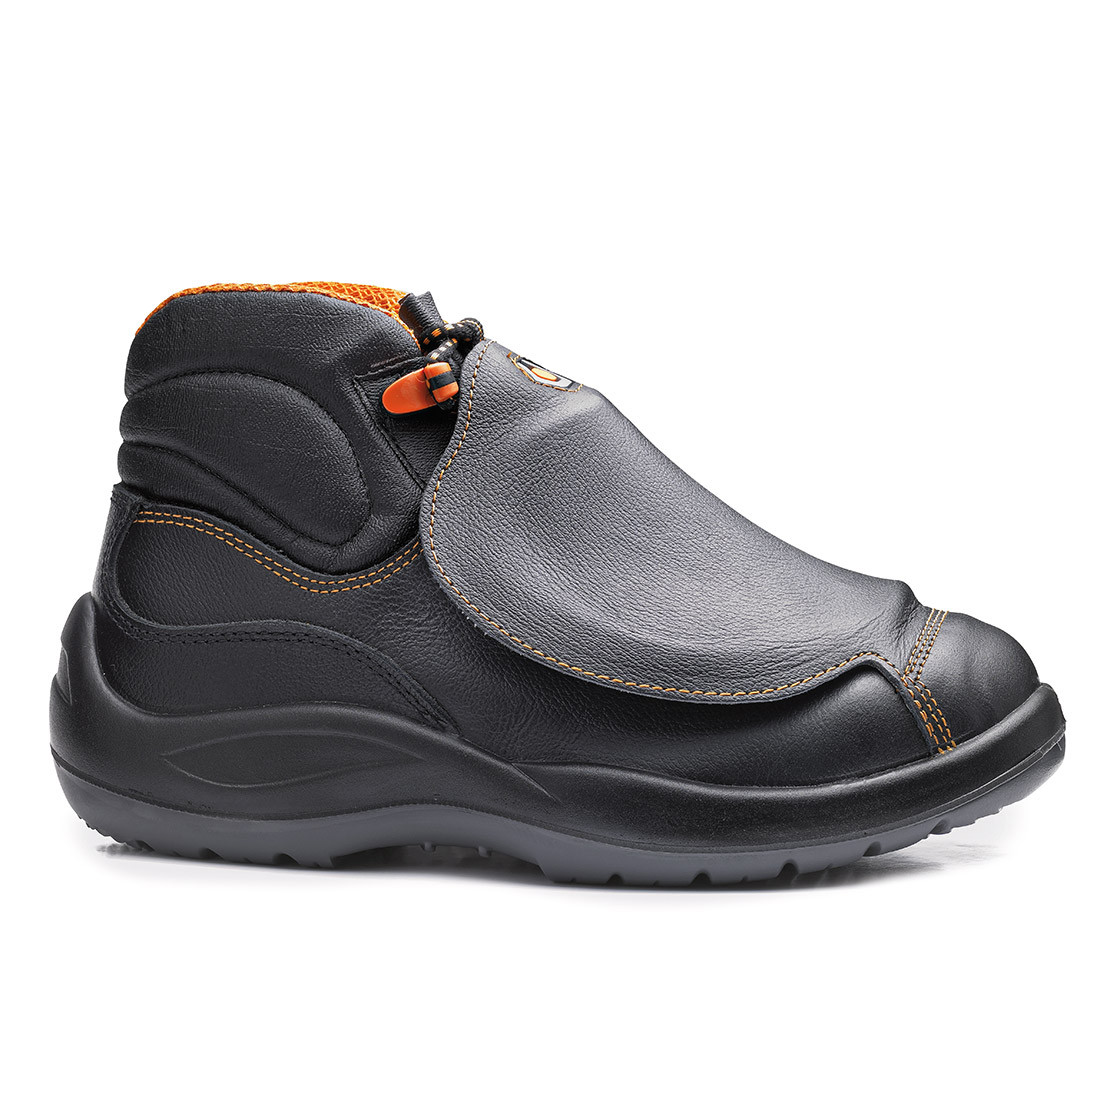 Metatarsal Boot S3 M SRC - Les chaussures de protection